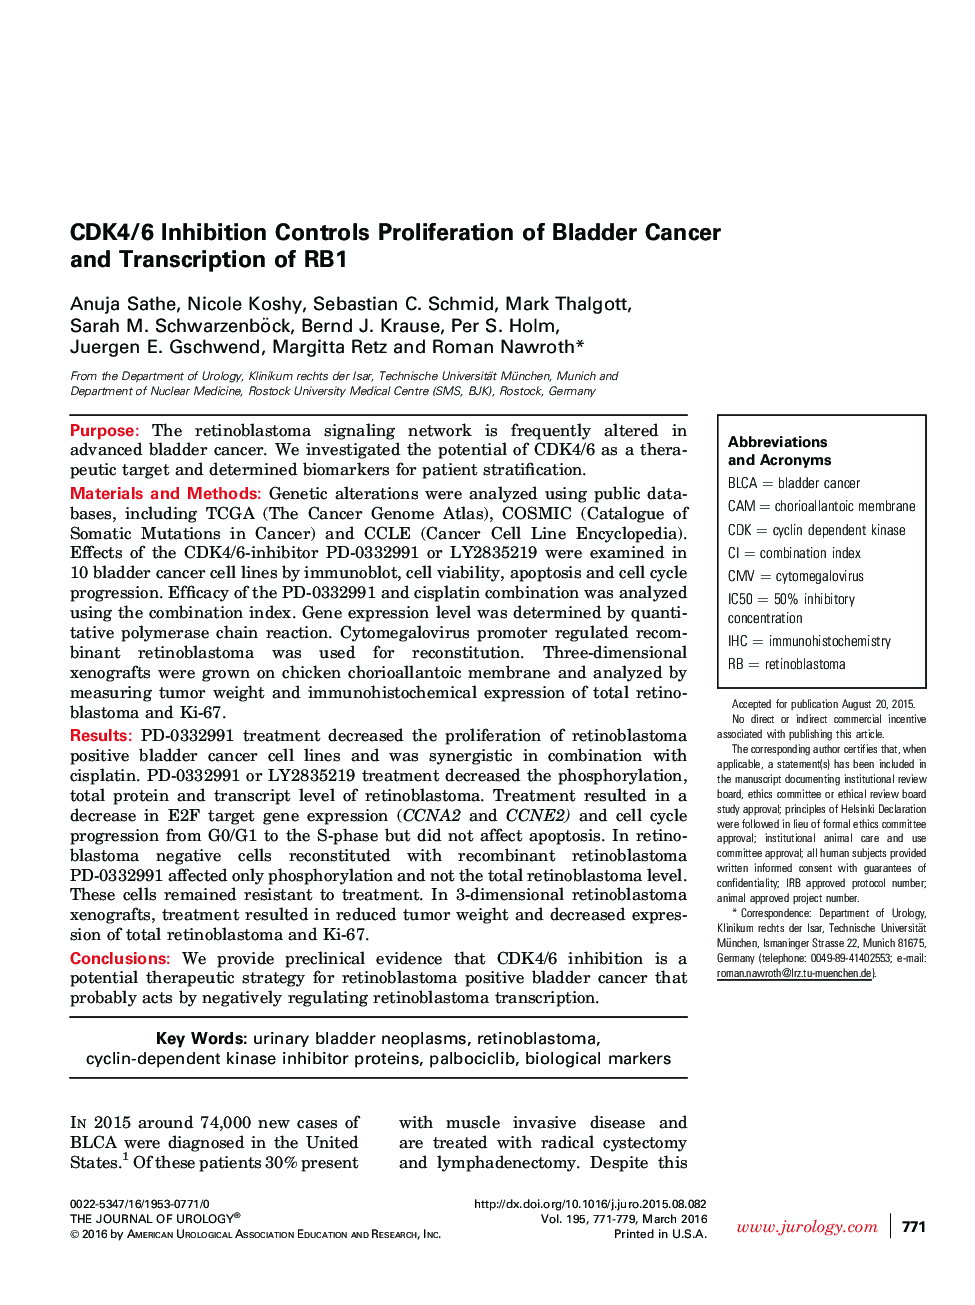 CDK4/6 Inhibition Controls Proliferation of Bladder Cancer and Transcription of RB1 